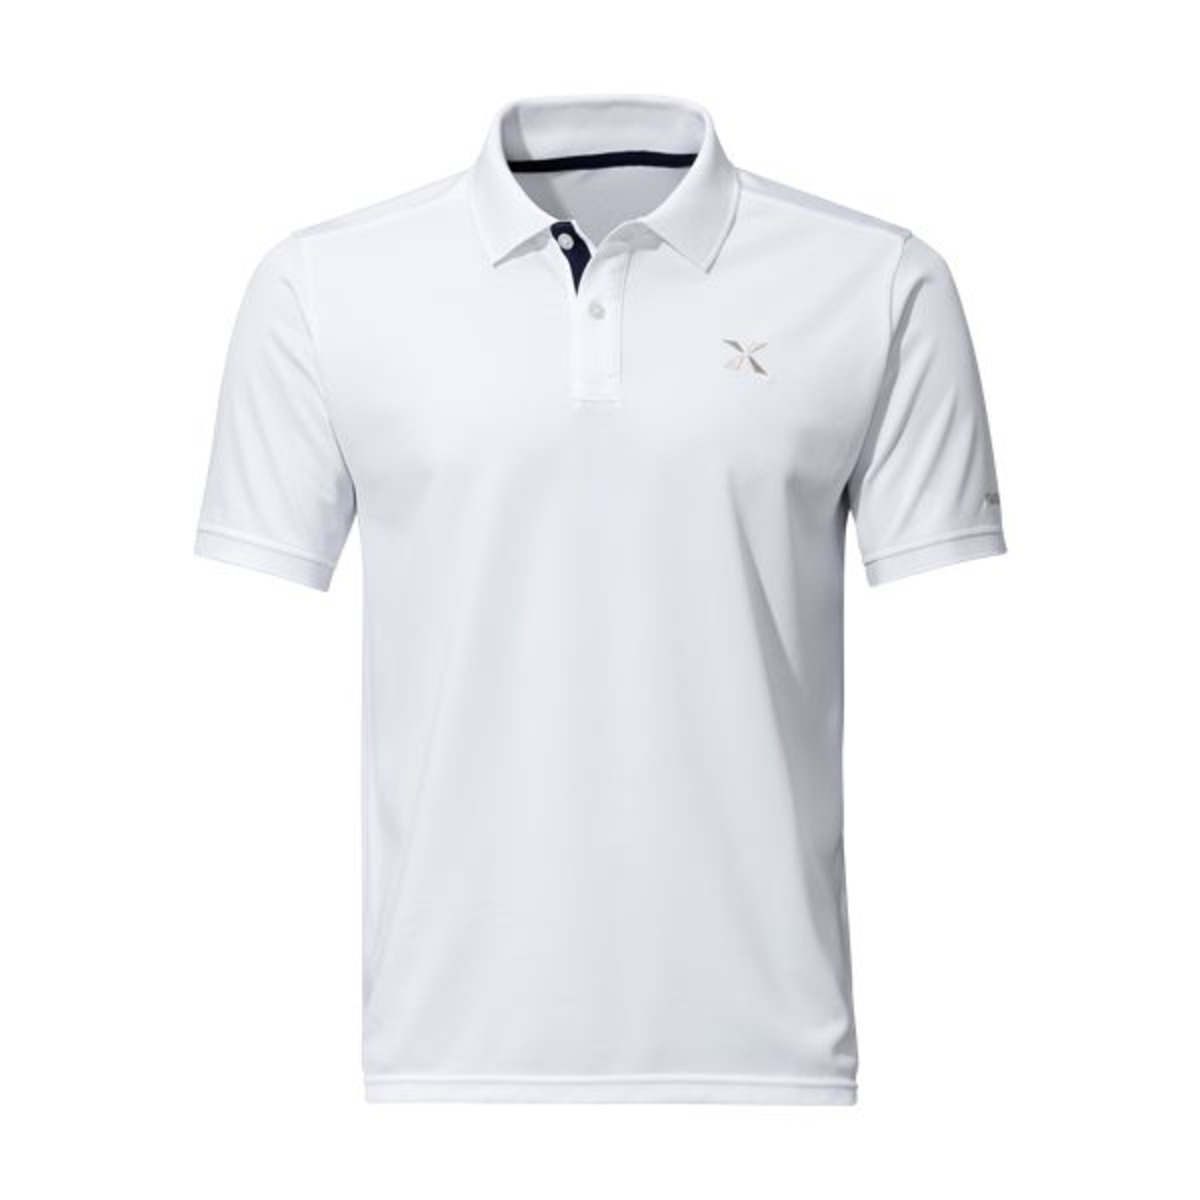 Shimano Polo T-shirt Xefo - M - White-Navy